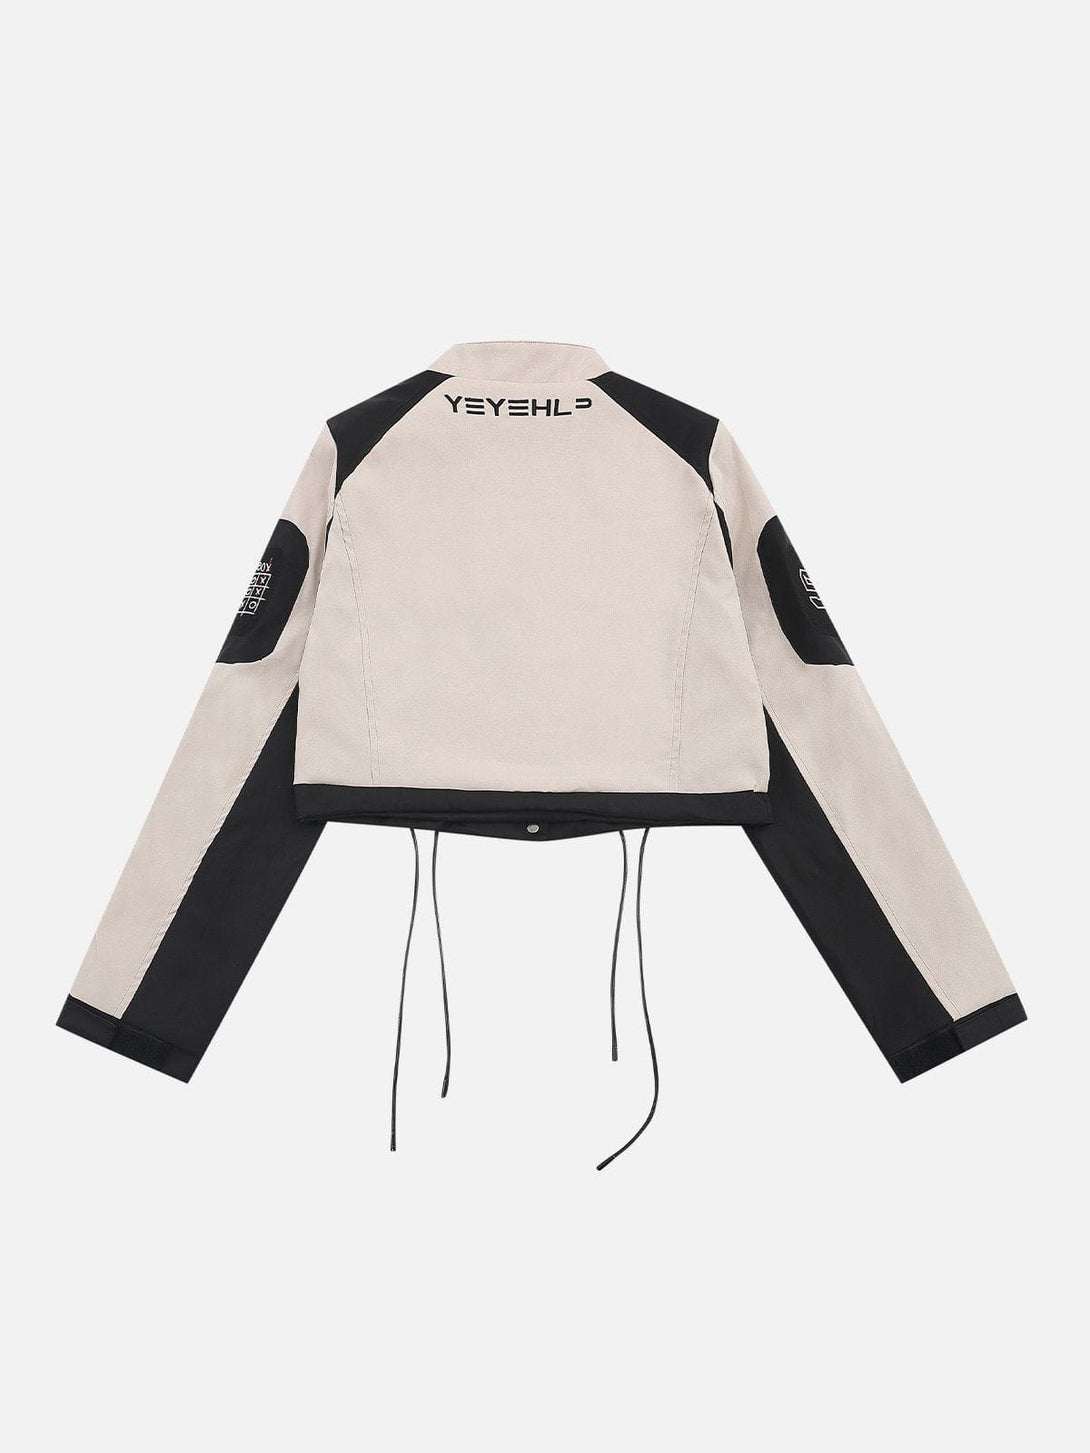 Levefly - Racing Jacket Set - Streetwear Fashion - levefly.com